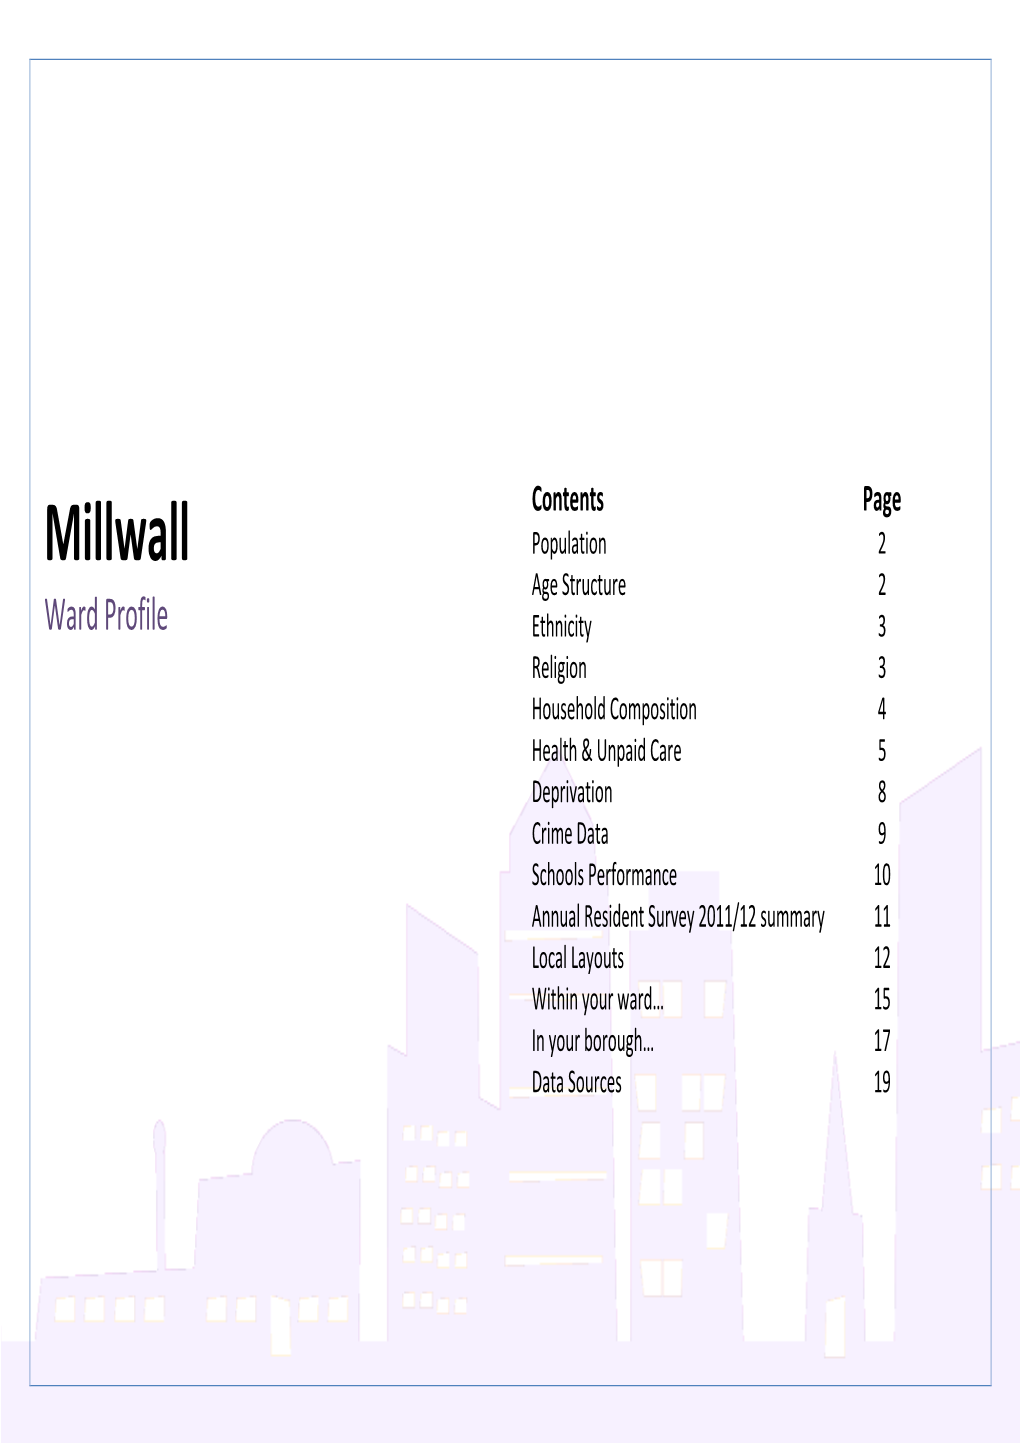 Millwall Population 2 Age Structure 2 Ward Profile Ethnicity 3 Religion 3